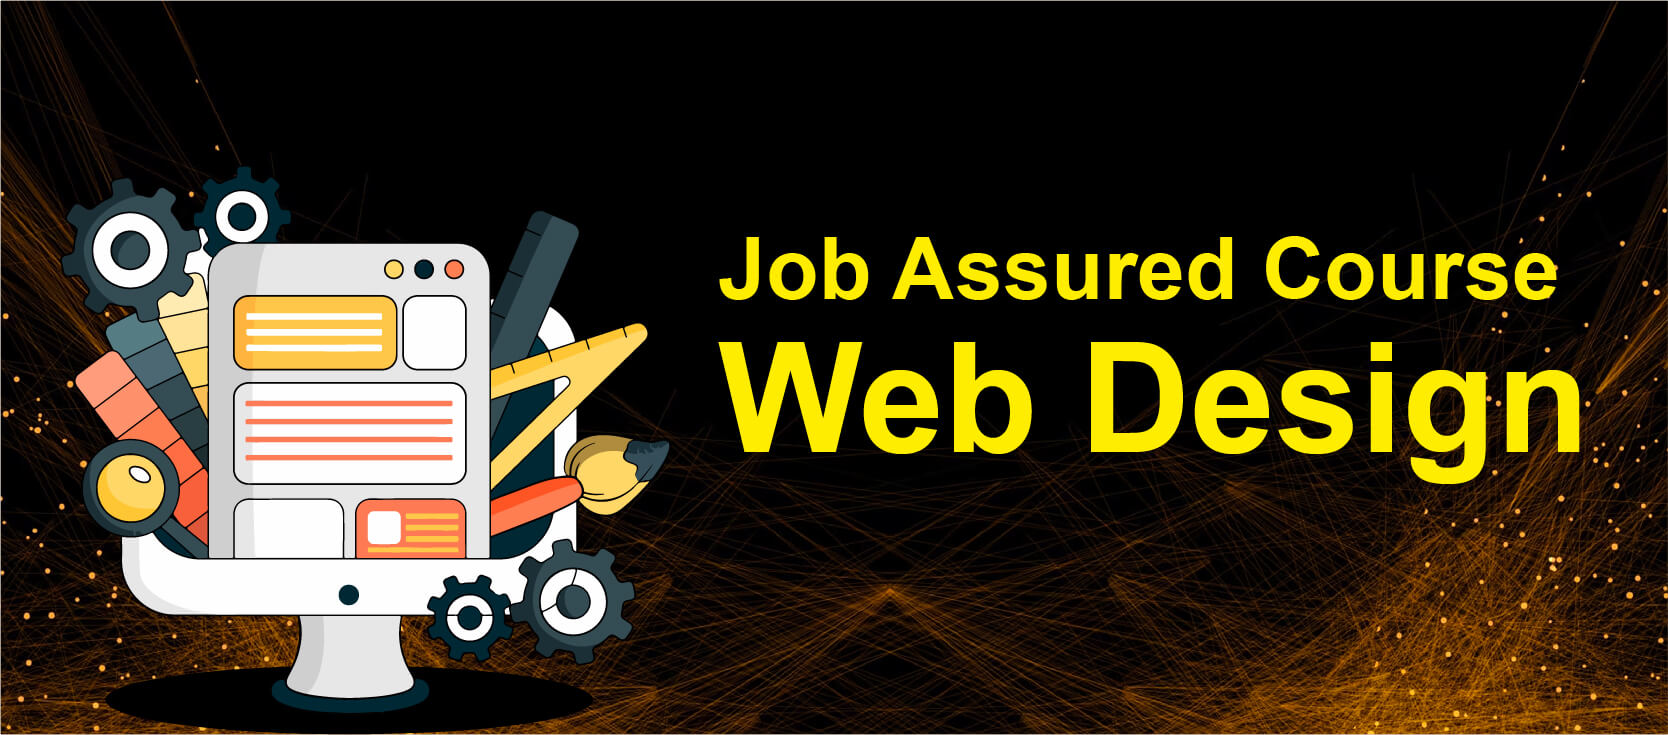 Web Design Job Assured Course